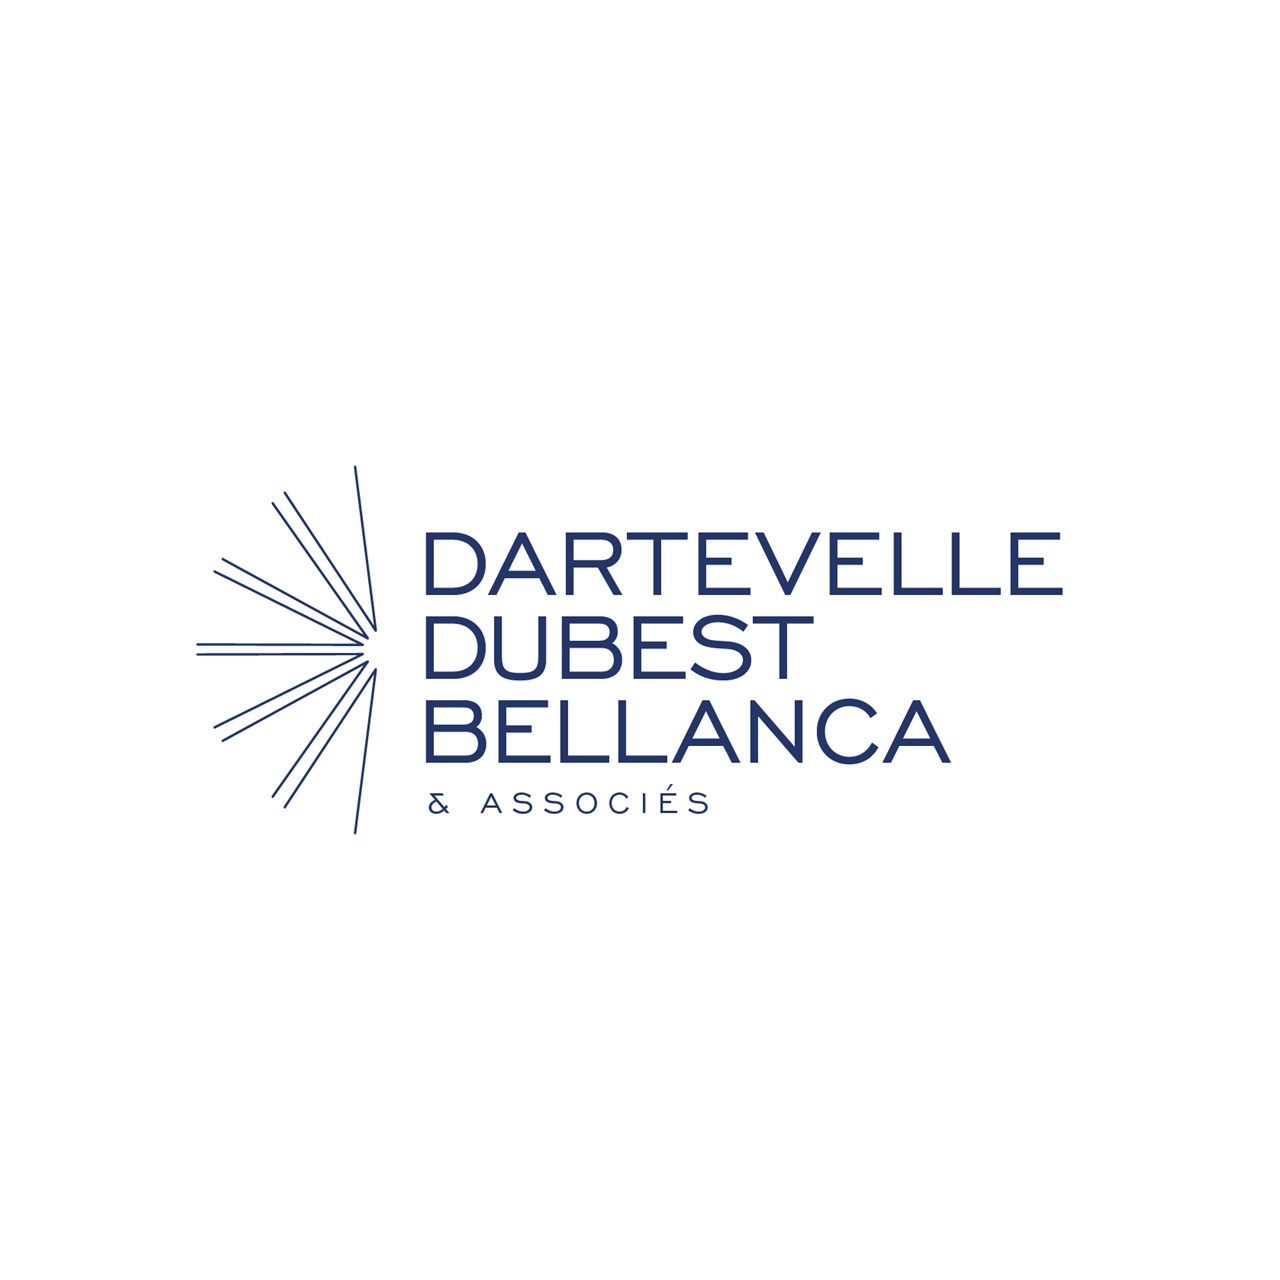 Dartevelle Dubest Bellanca & Associés